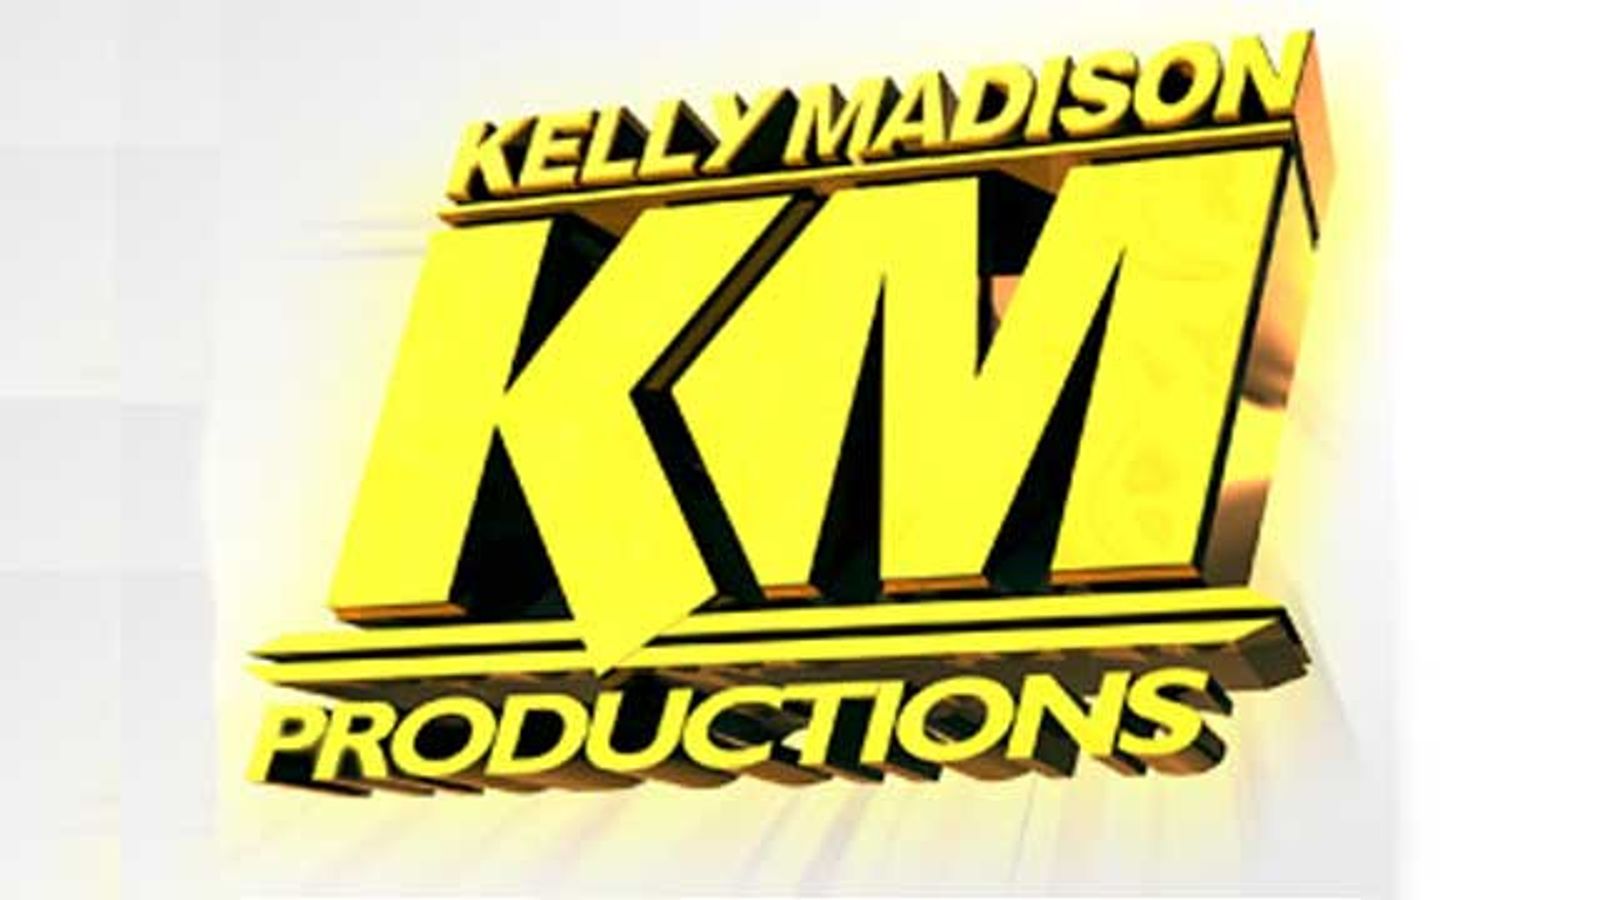 Ryan & Kelly Madison Share Nominations for AVN Fan Awards